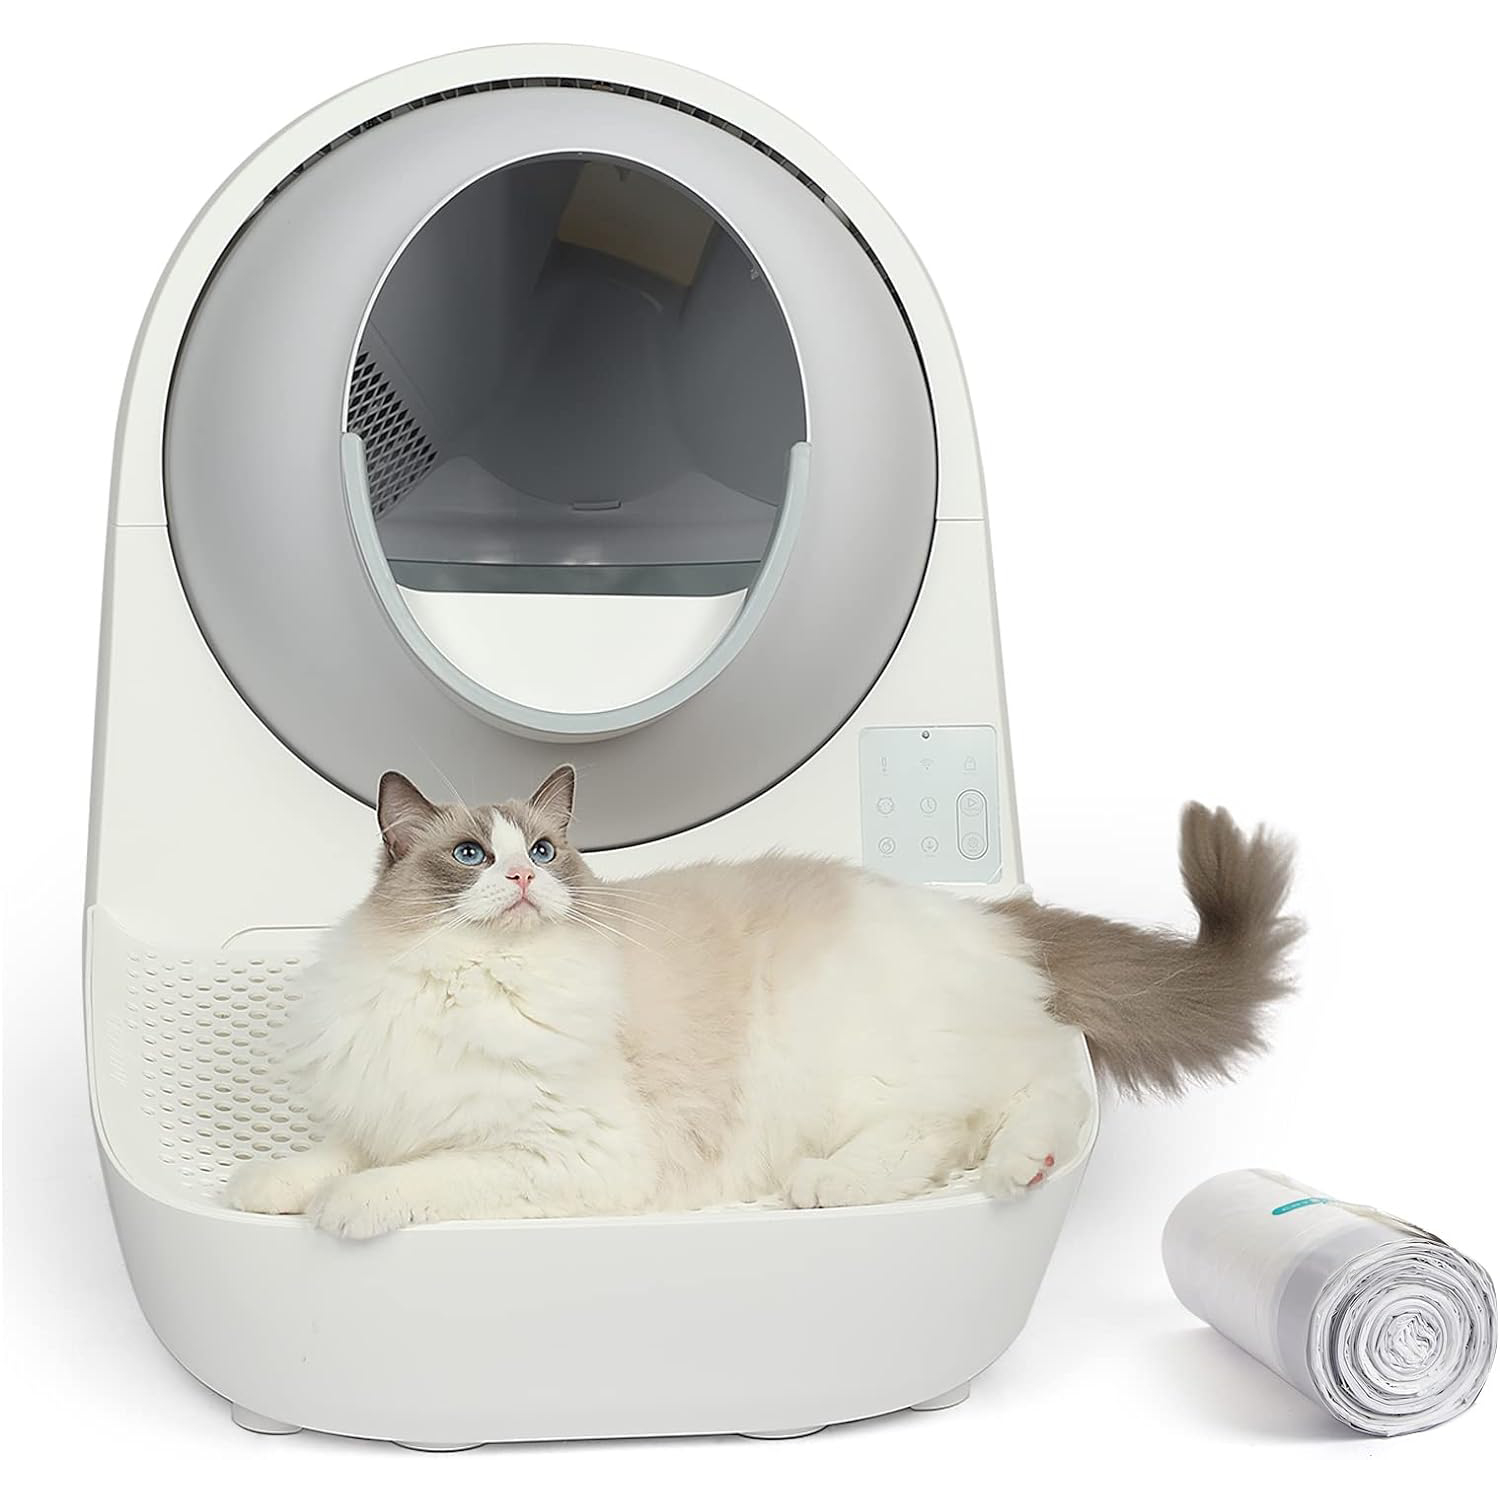 boqii Self-Cleaning Cat Litter Box new